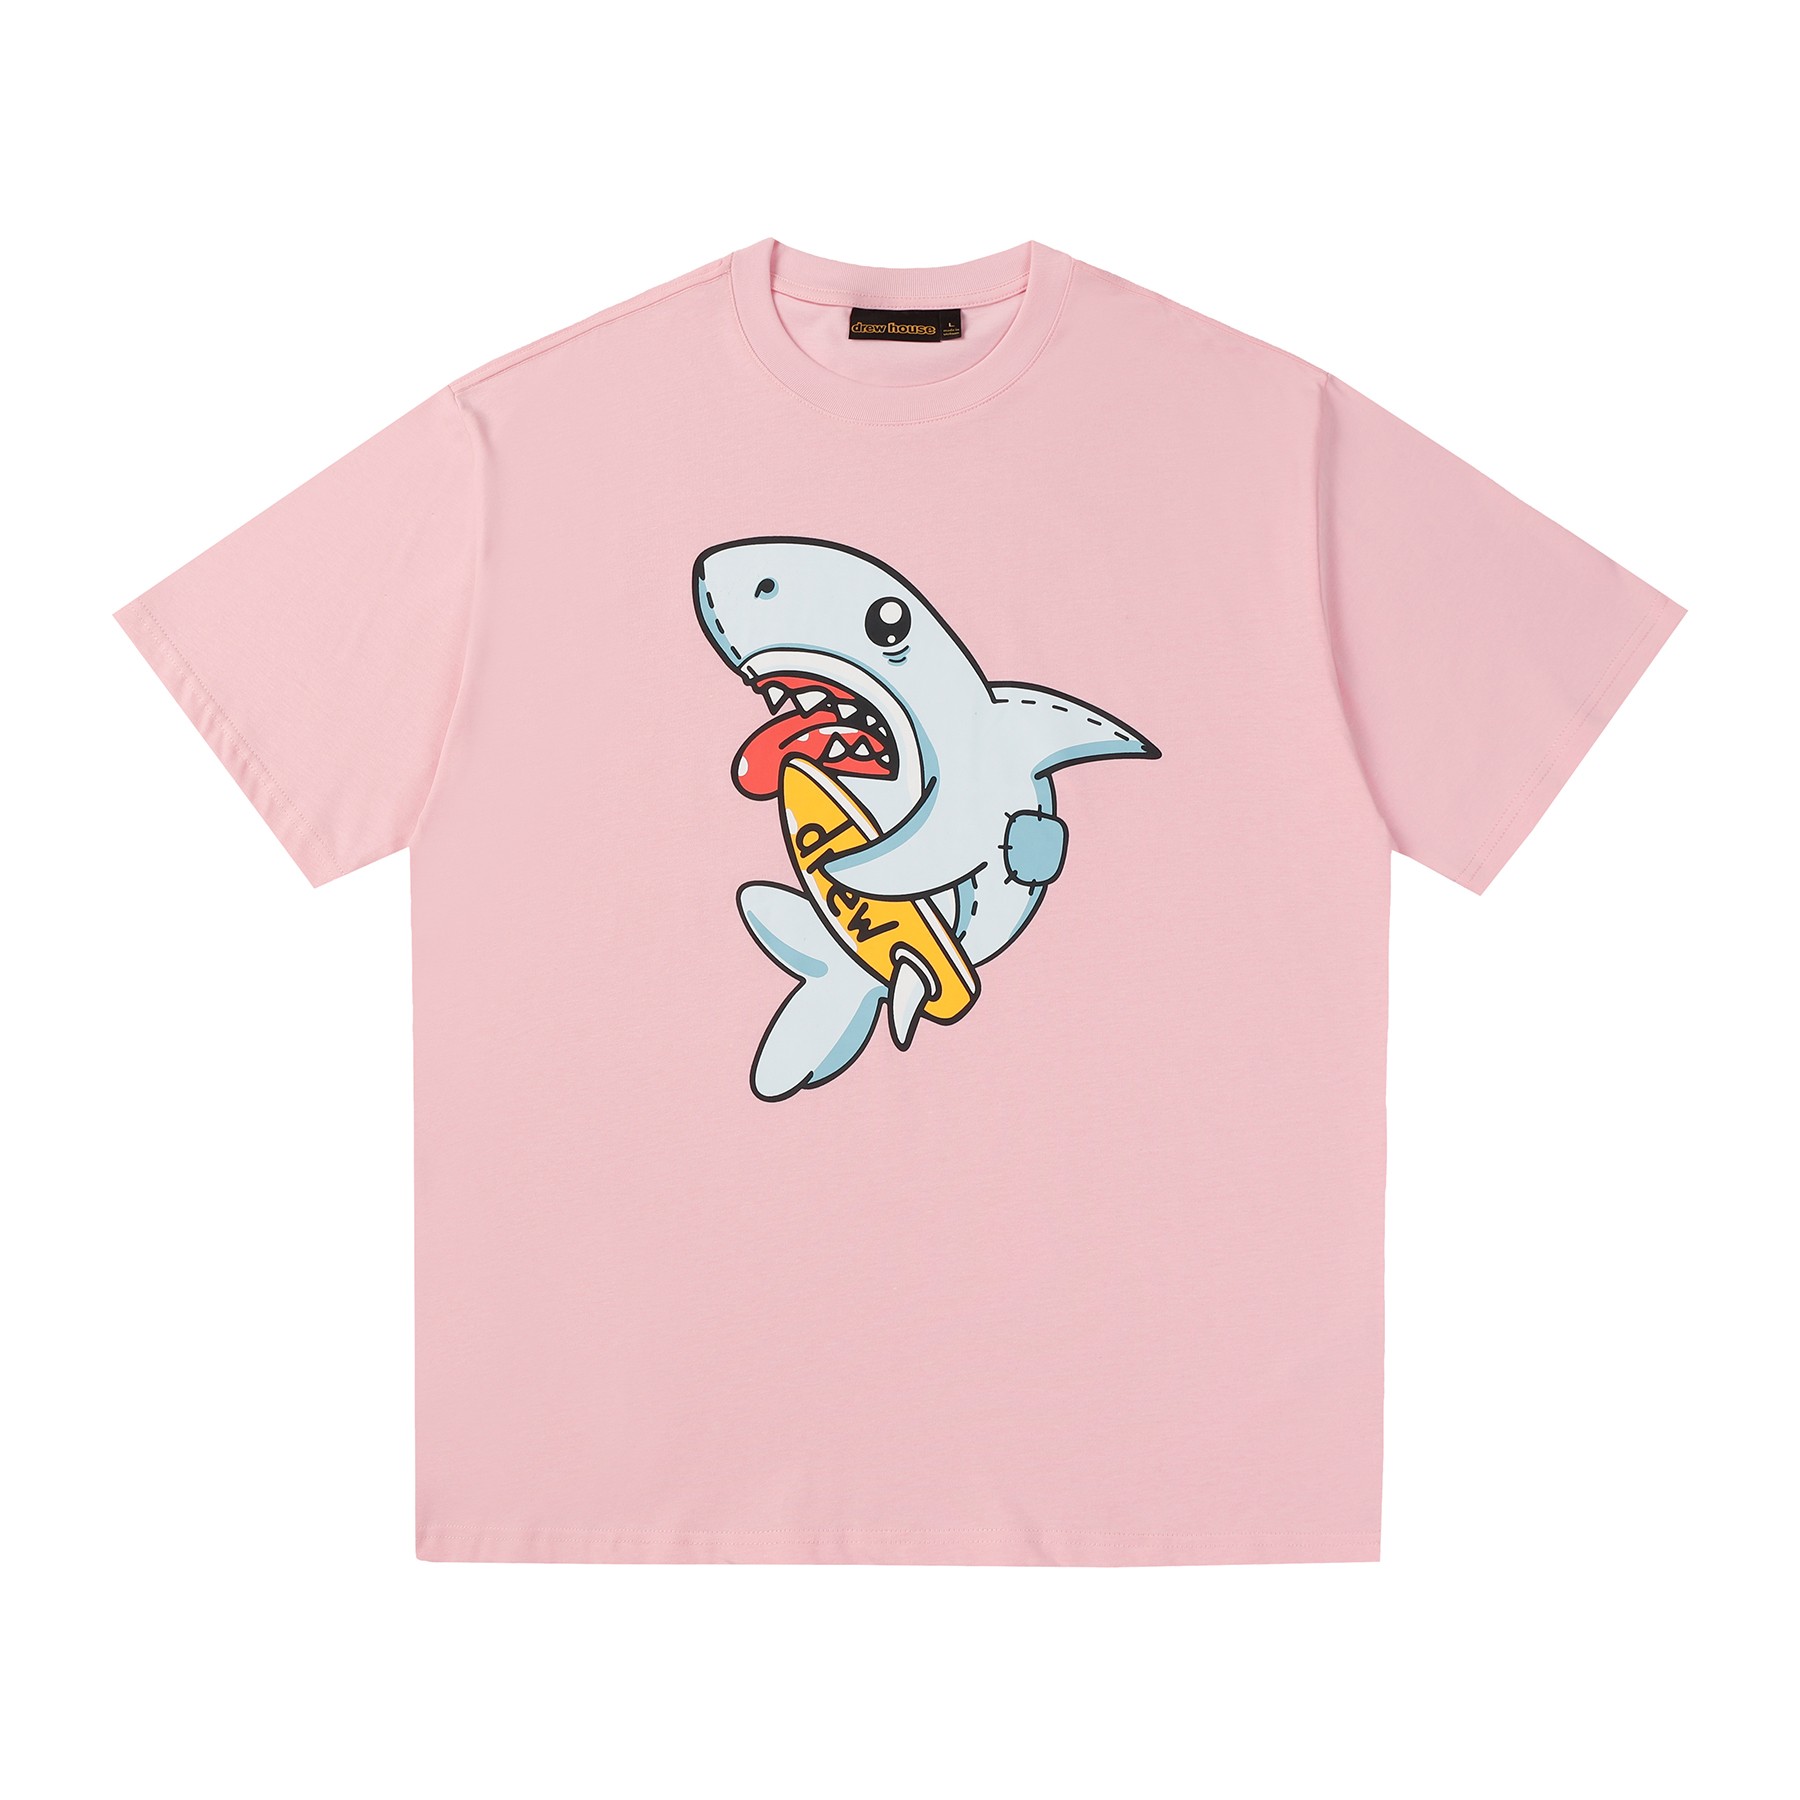 Drew House Clothing T-Shirt Pink Printing Short Sleeve